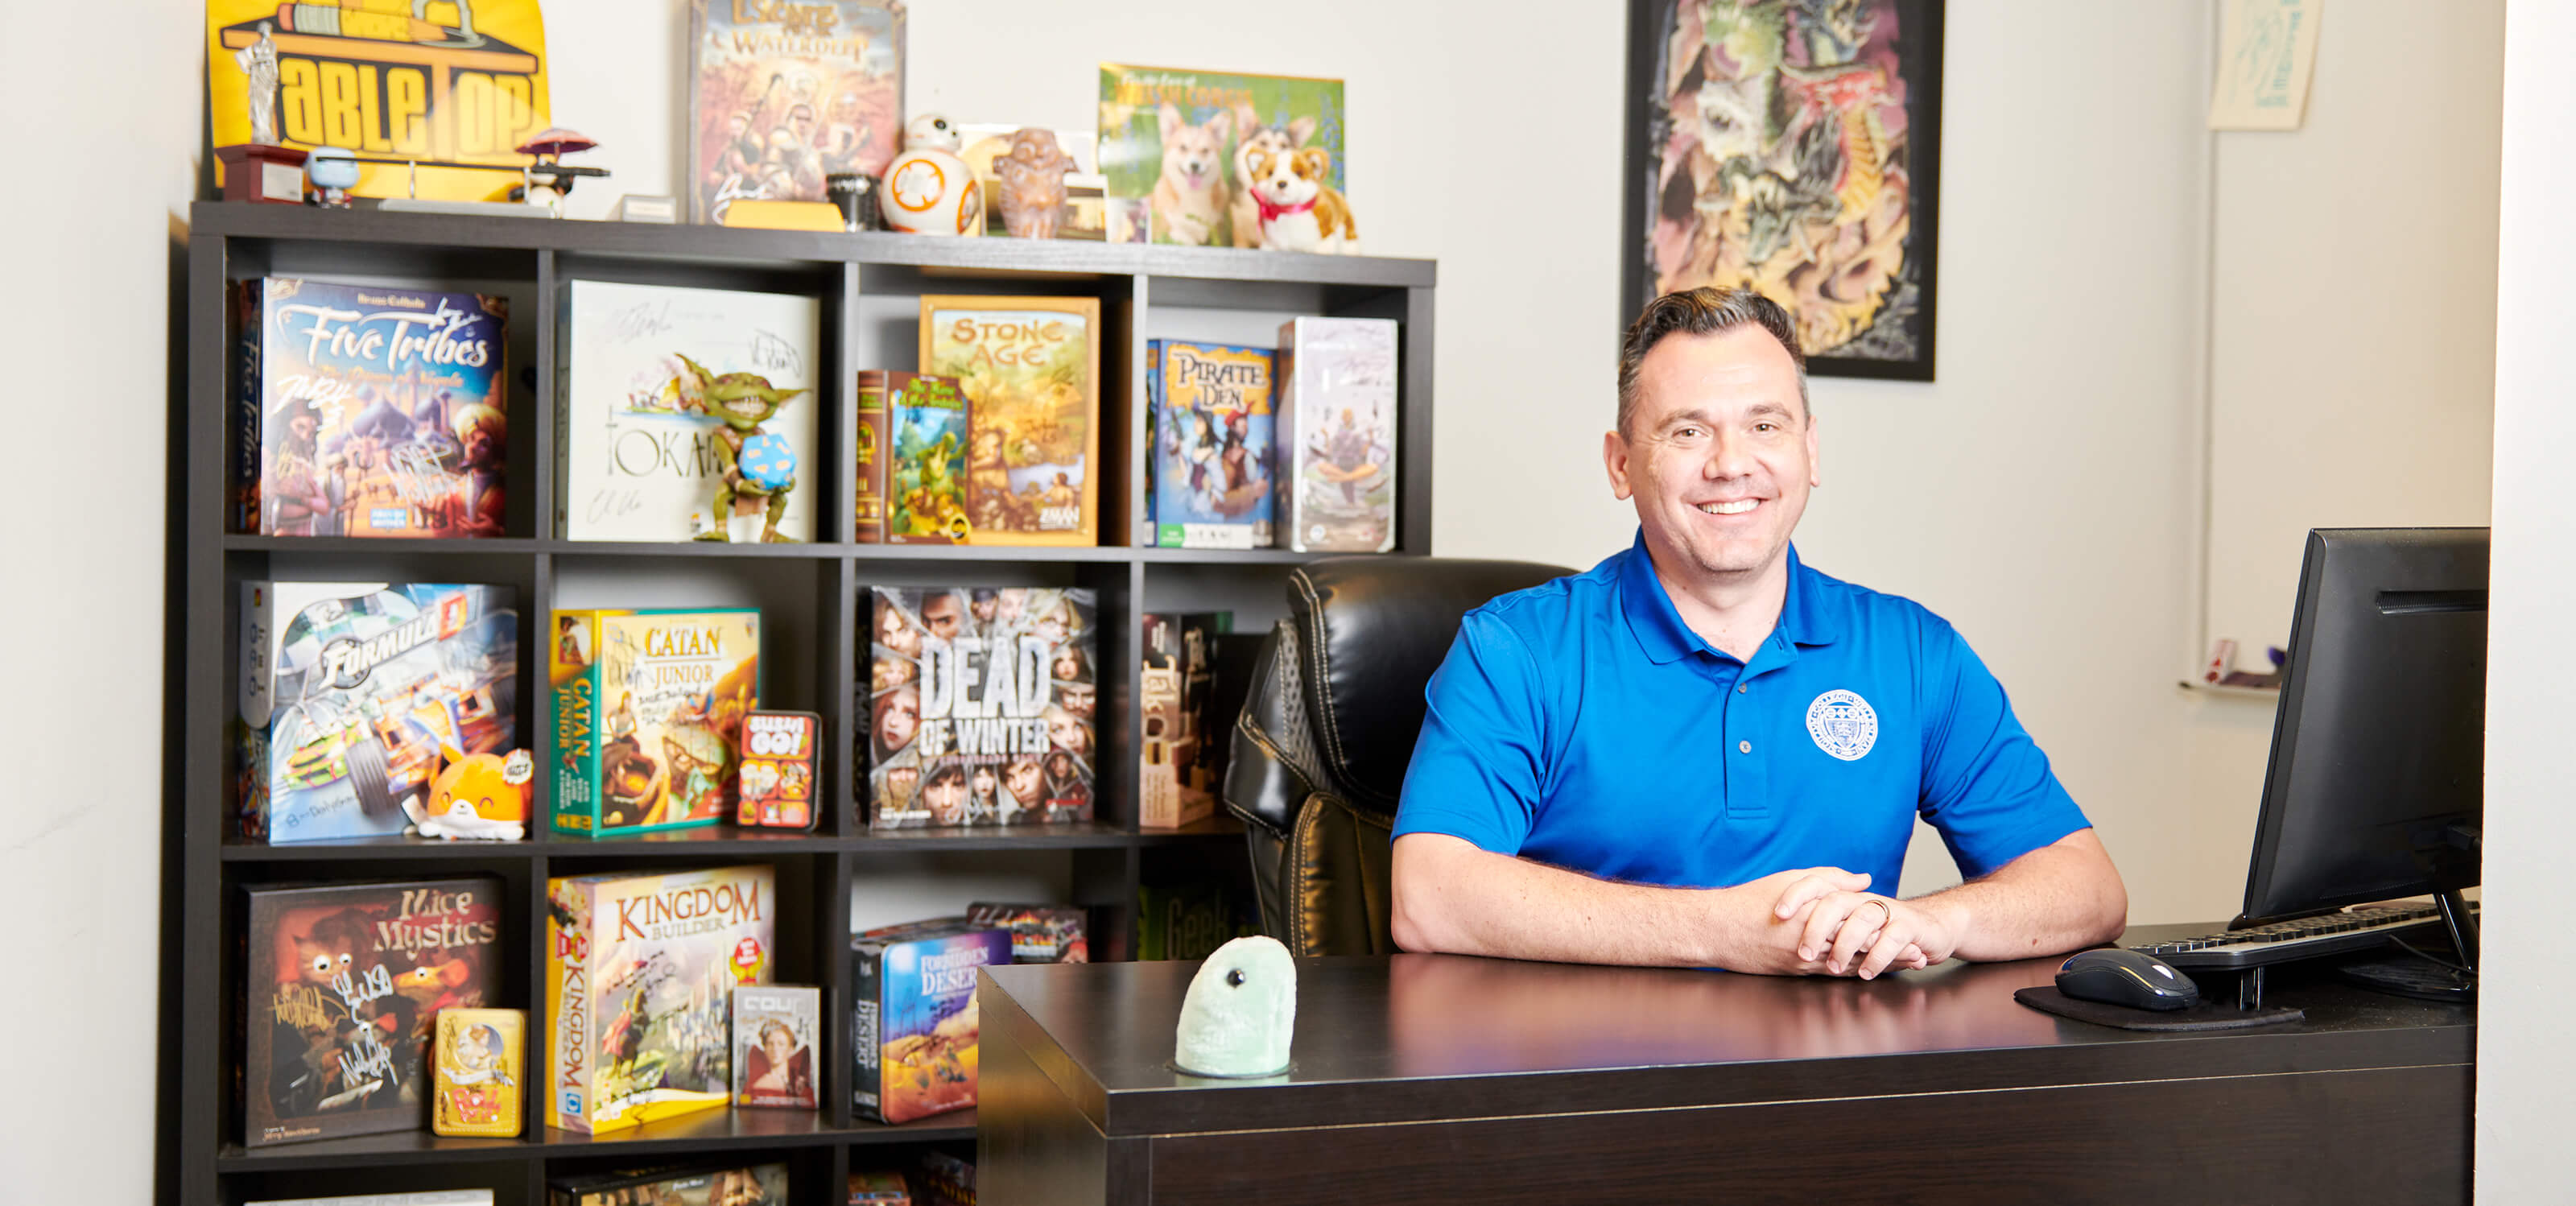 Senior game design lecturer Boyan Radakovich smiles in his office full of tabletop games.